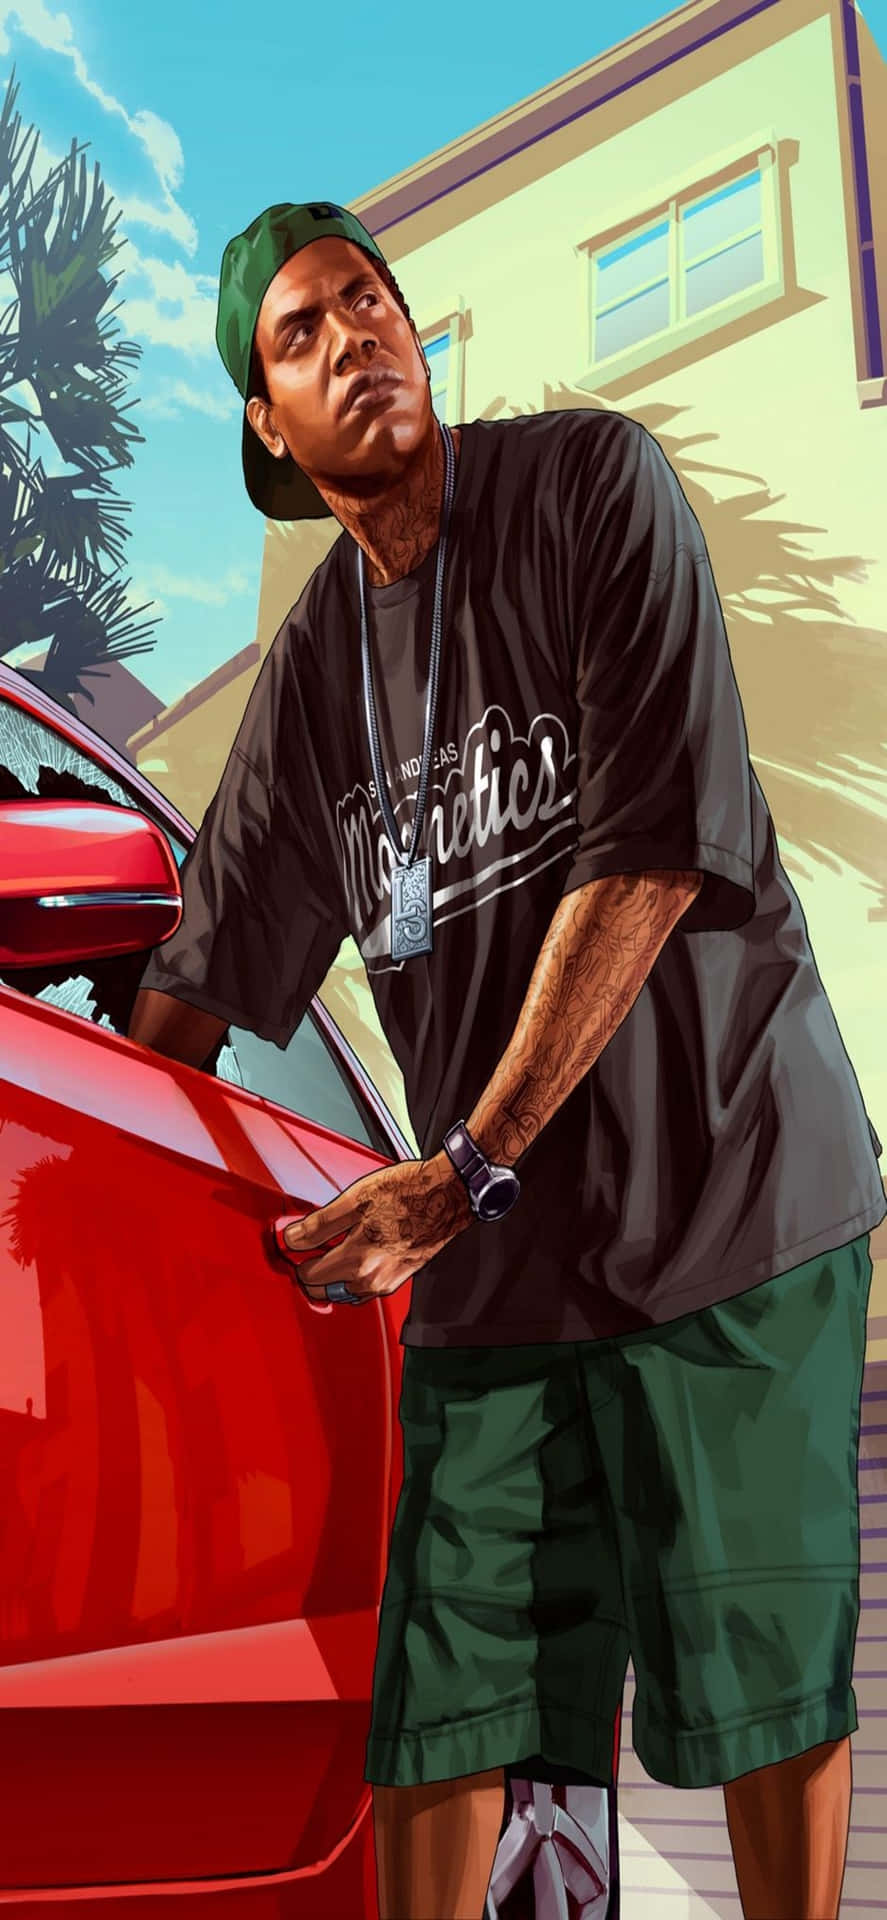 Iphone X Grand Theft Auto V Background&Lamar Davis